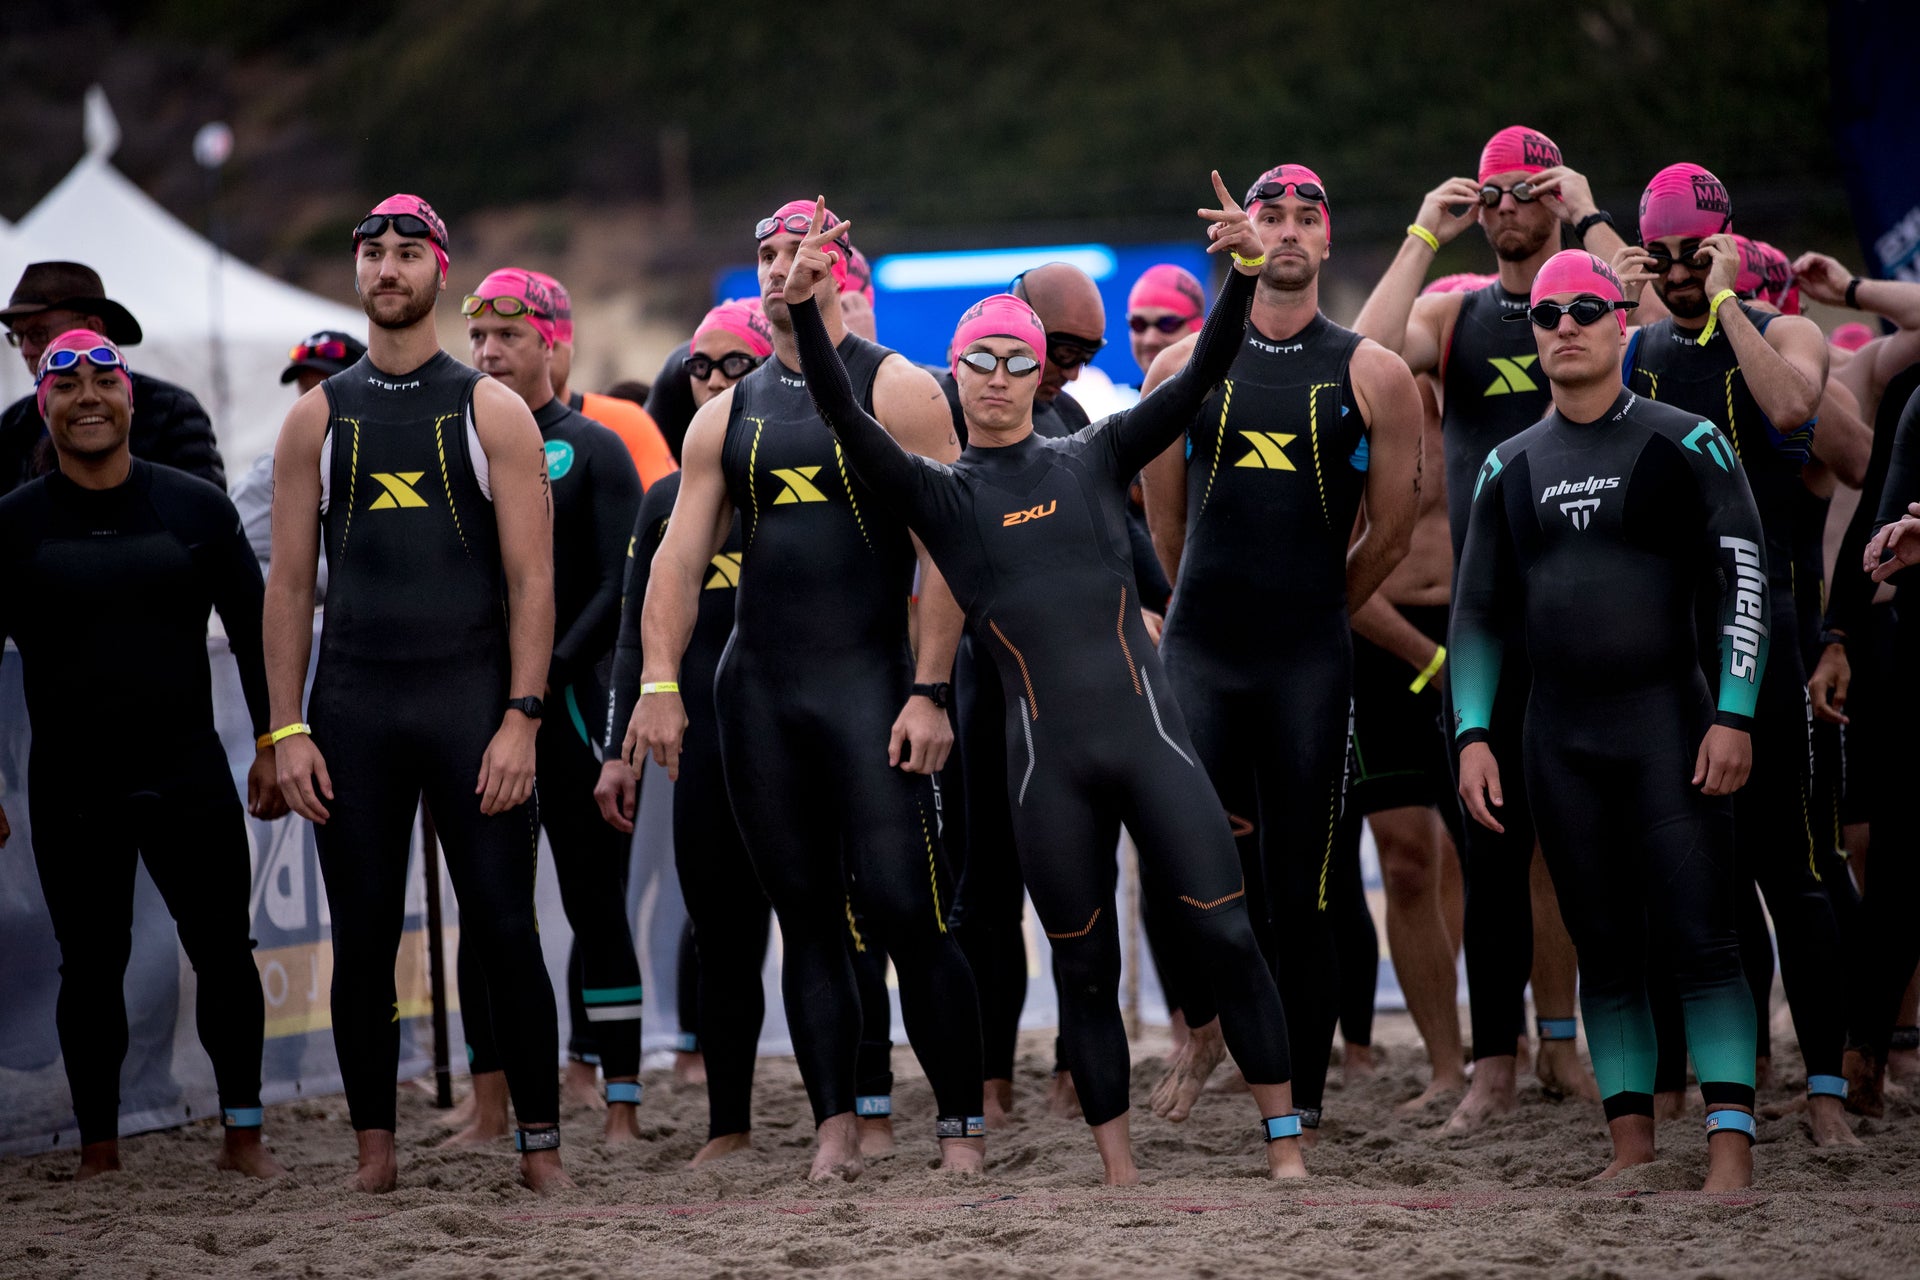 Nomadix Named Official Towel Sponsor of 38th Annual Malibu Triathlon